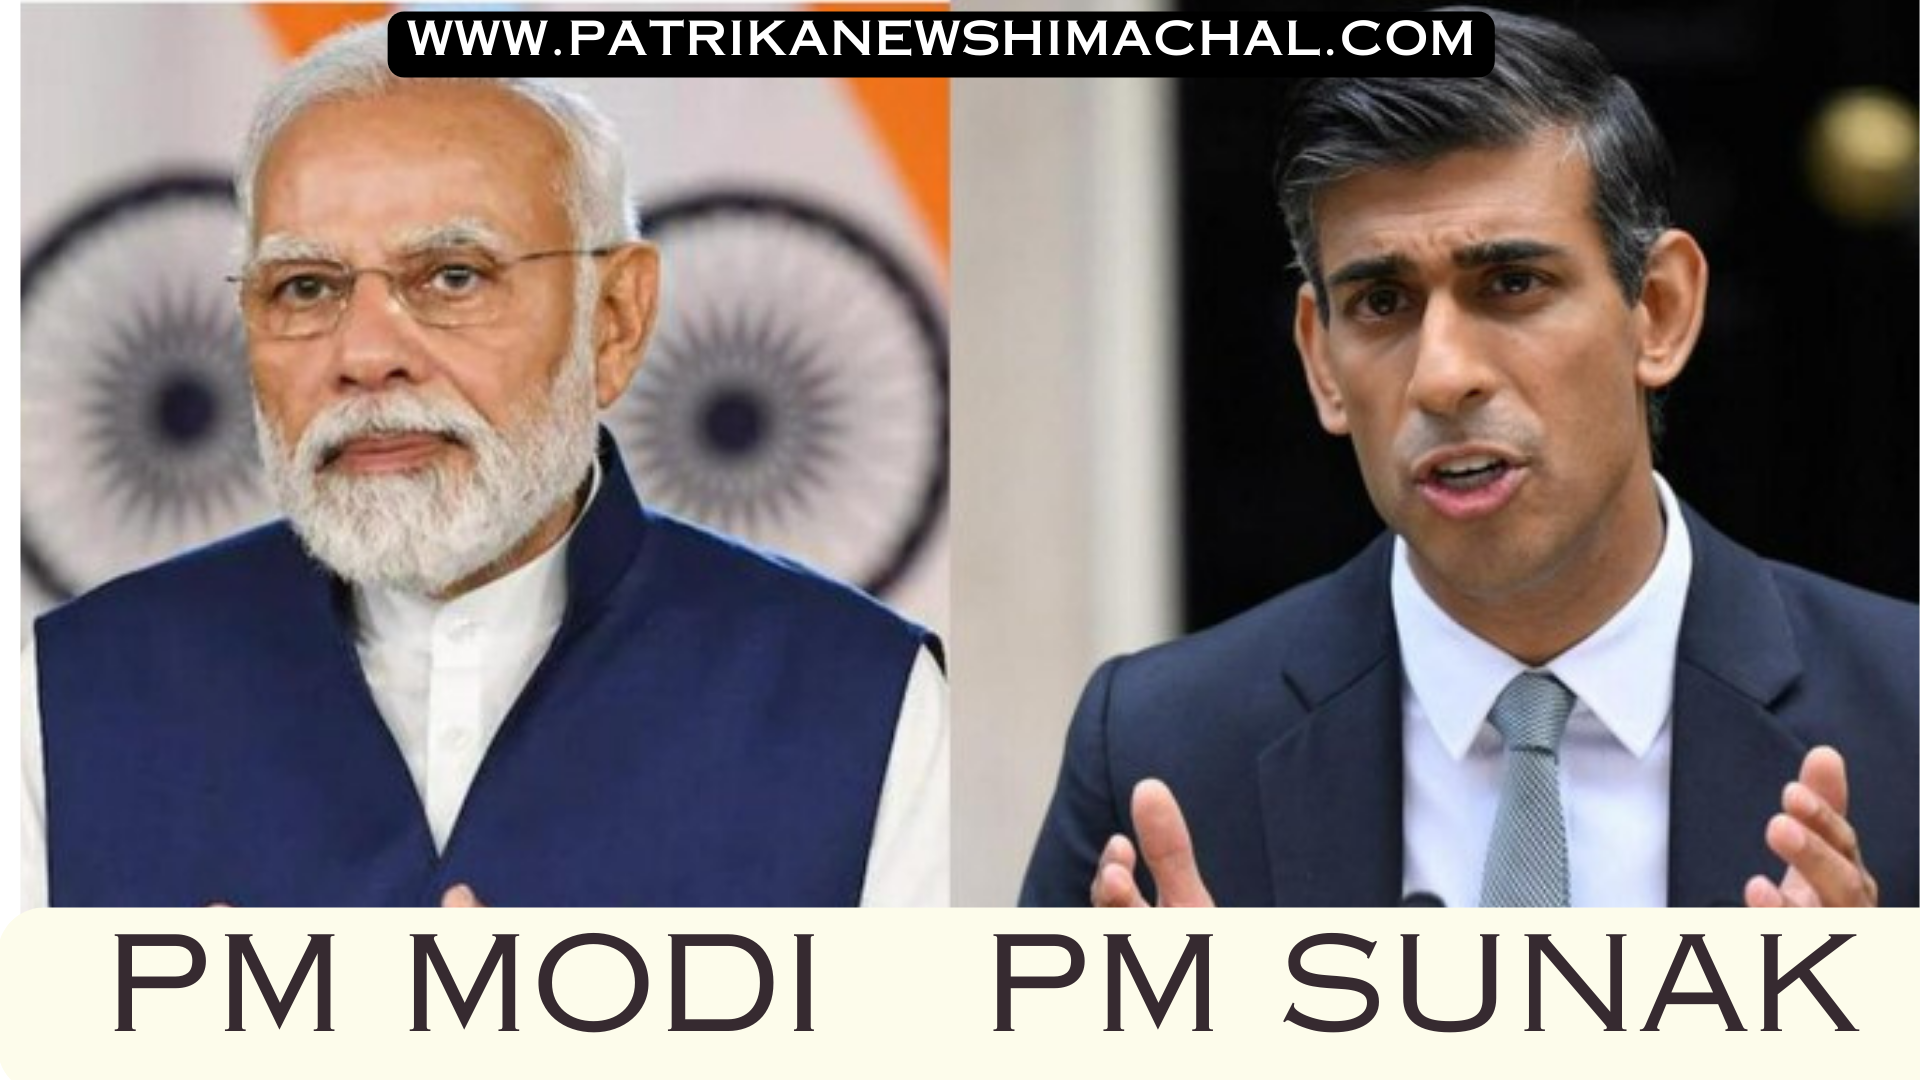 UK PM सुनक और PM मोदी